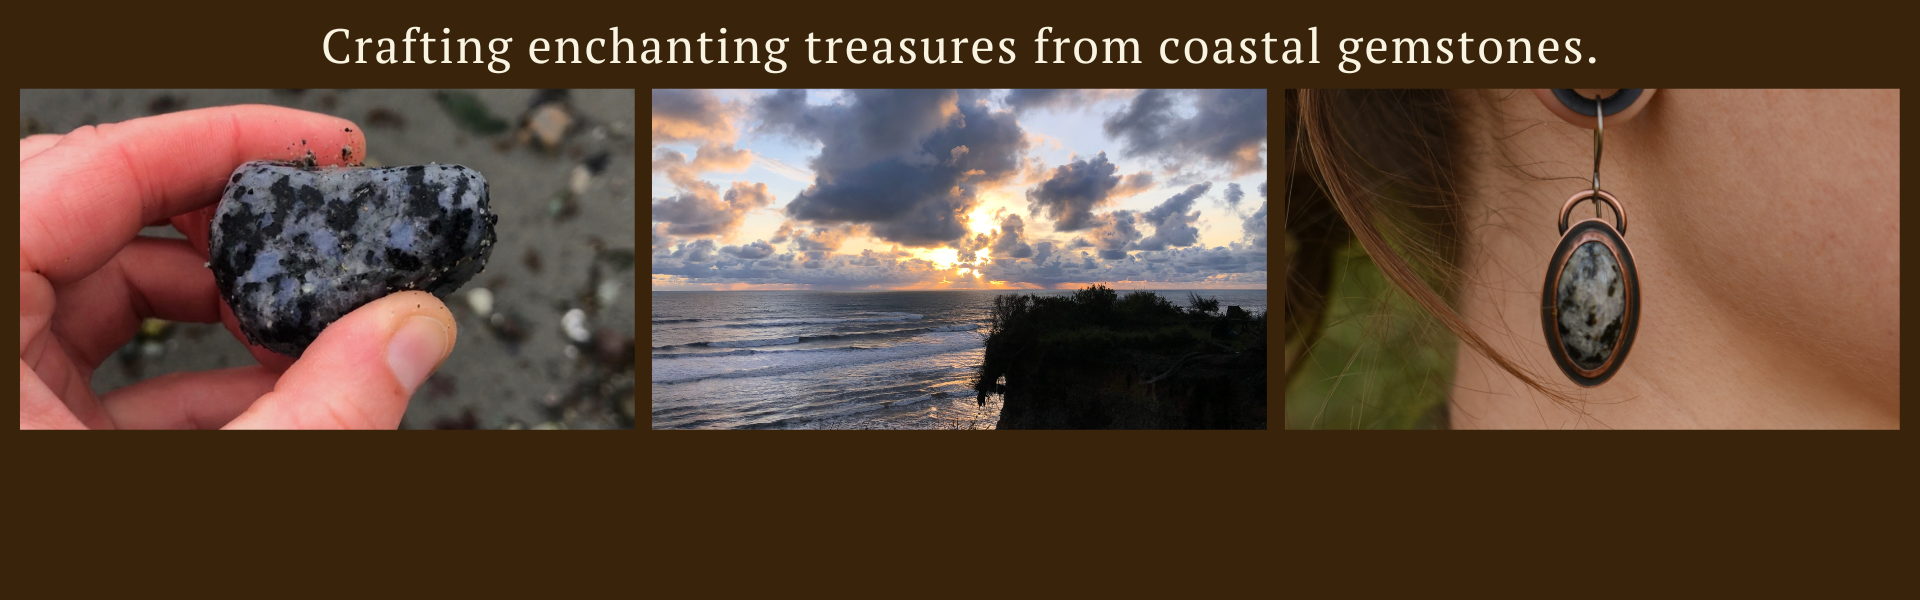 Crafting enchanting treasures from coastal gemstones.